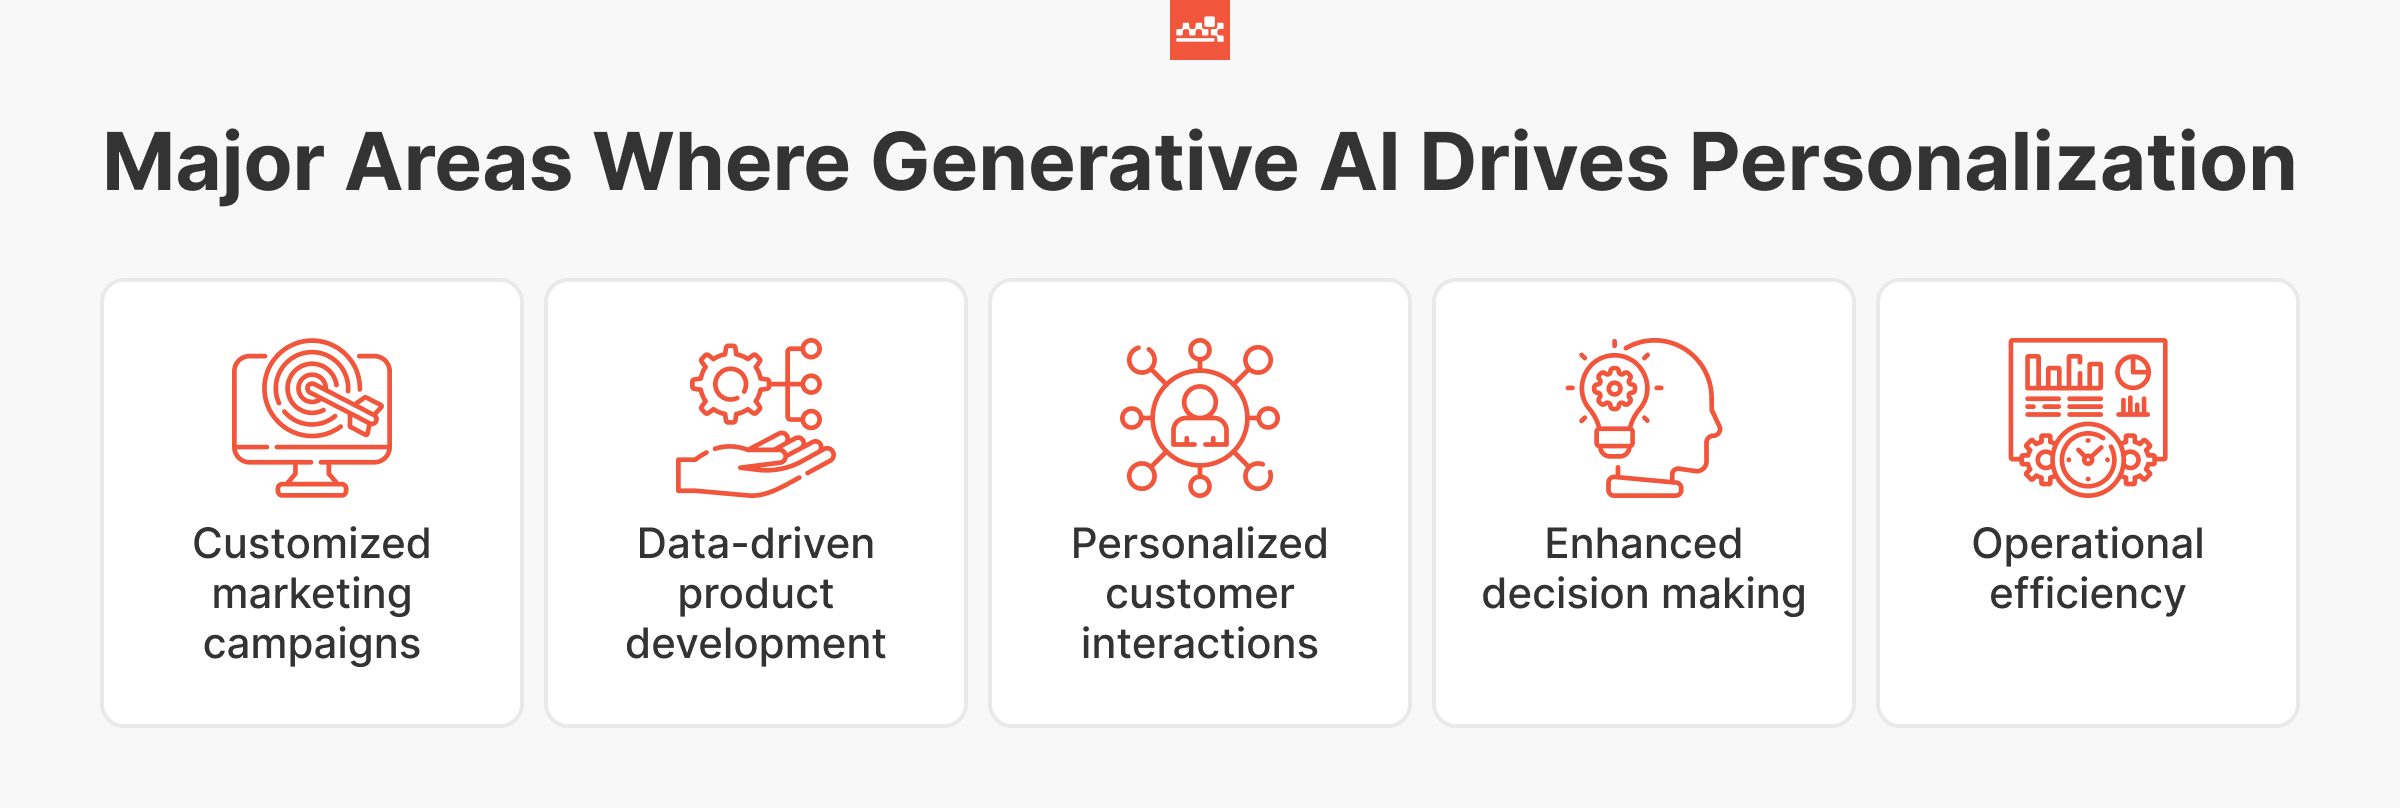 Generative AI Use Cases in Personalization